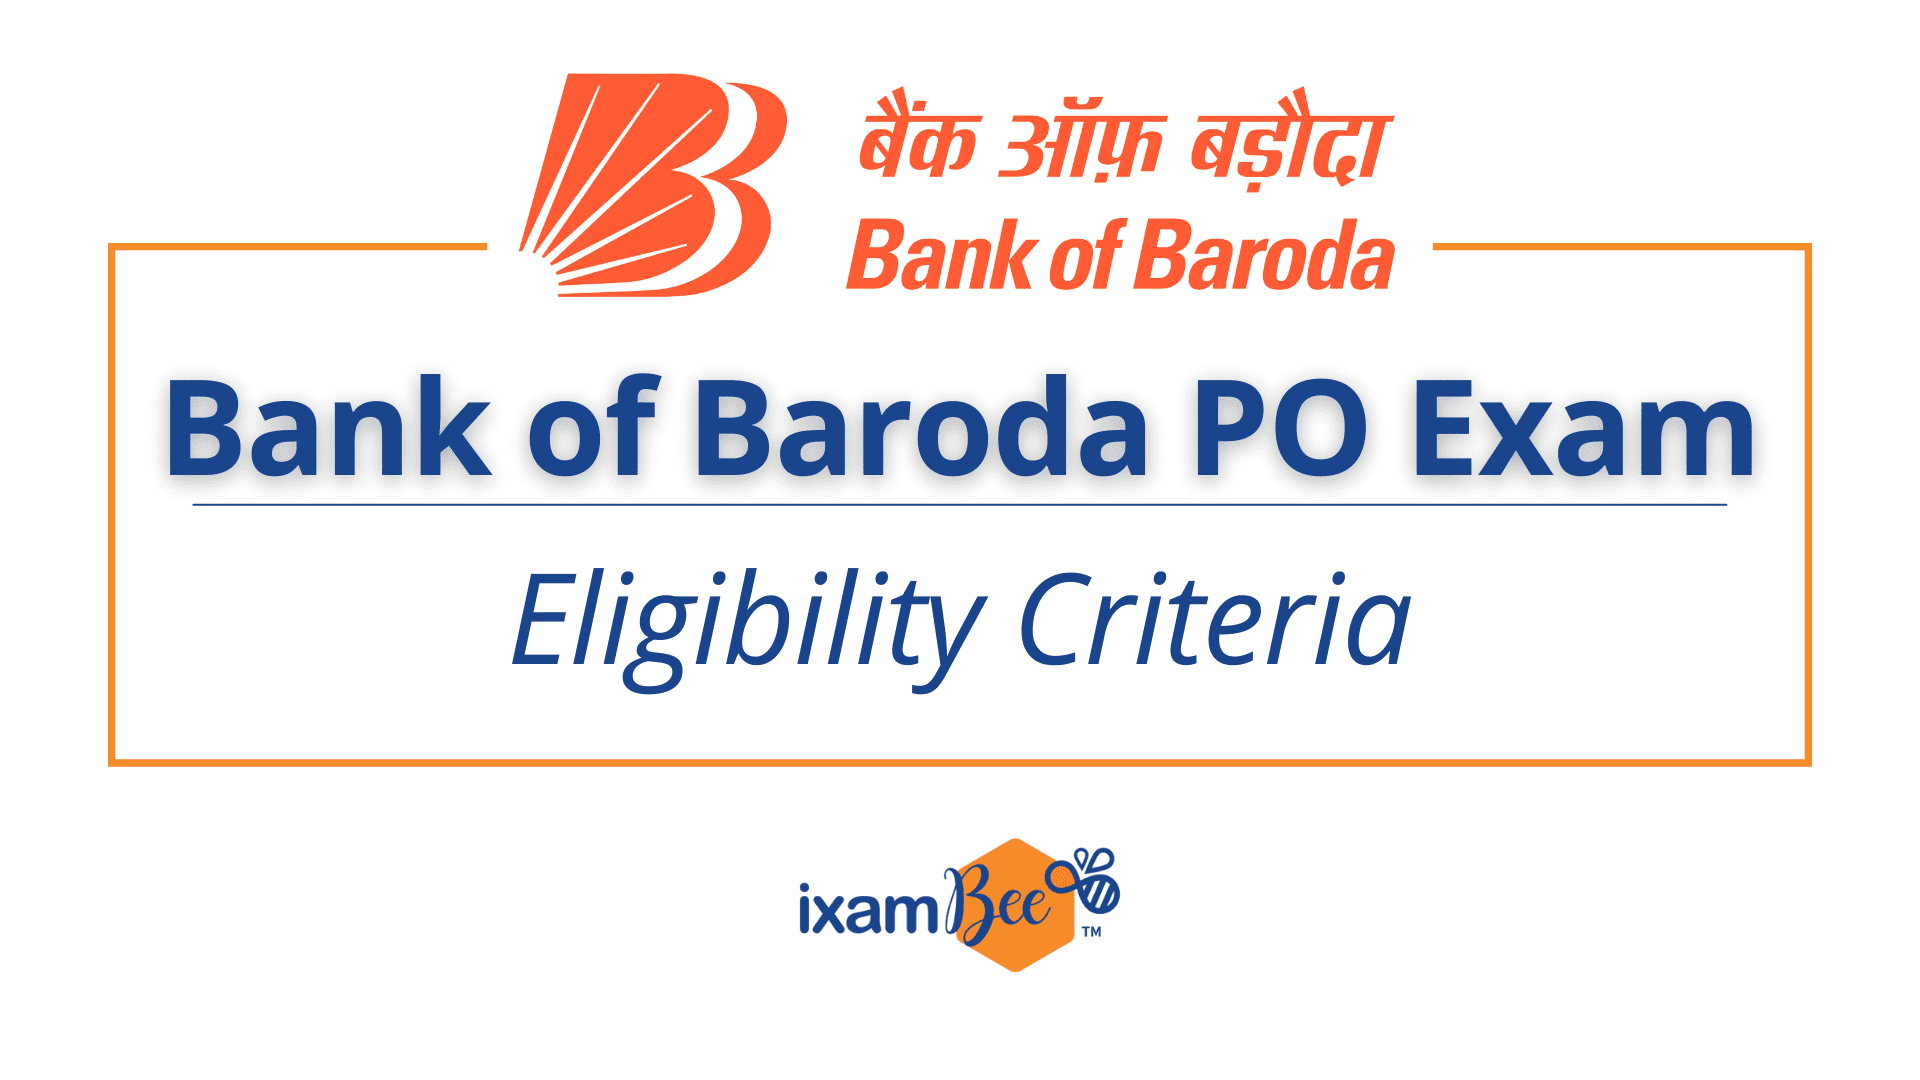 Bank of Baroda PO Exam Eligibility Criteria